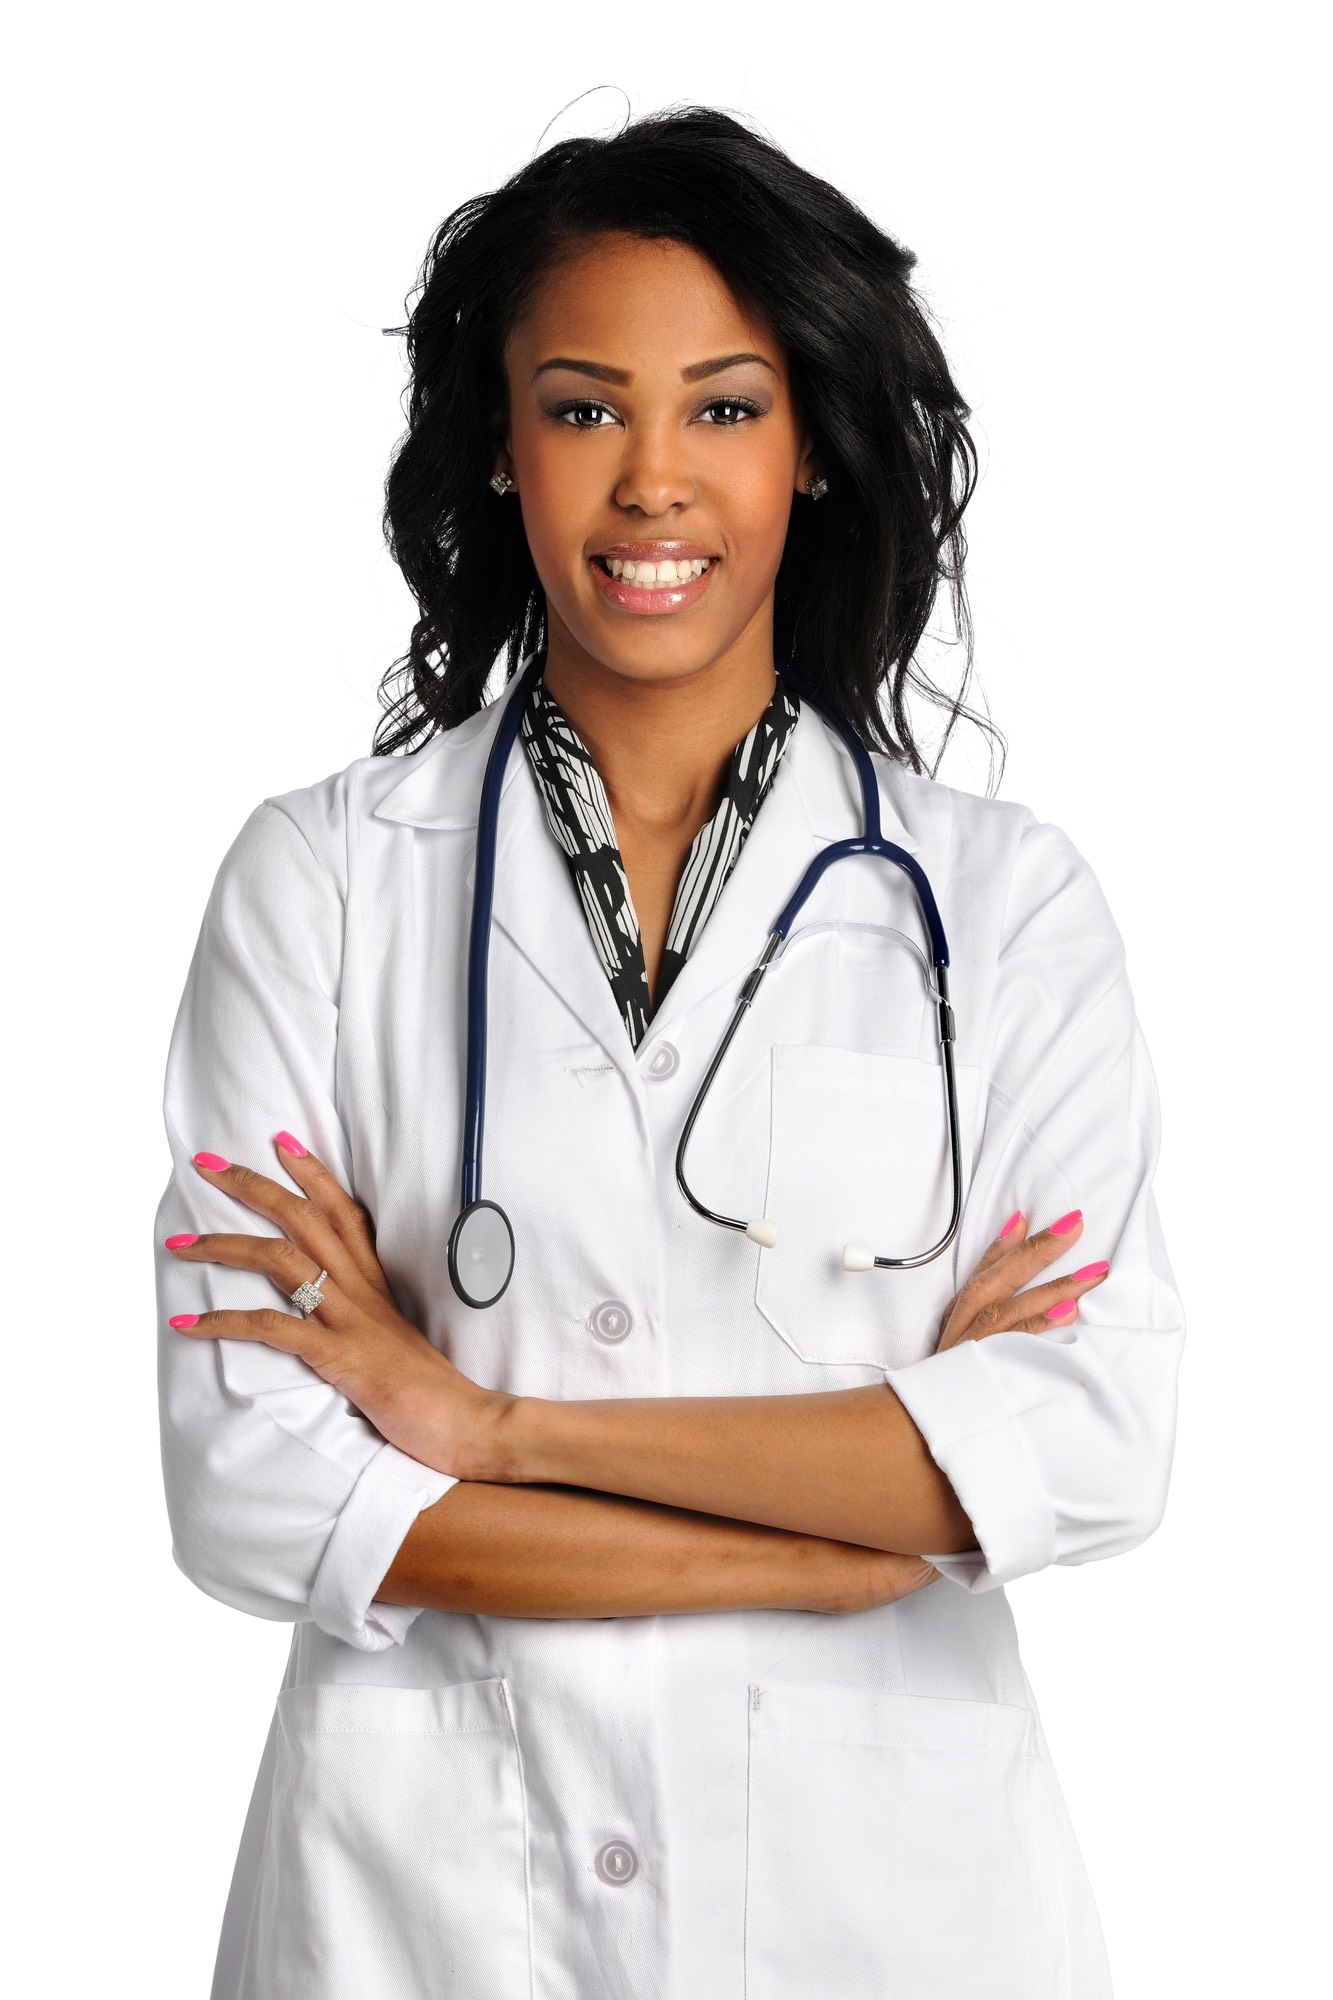 Doctor black. Темнокожие девушки врачи. Женщина врач. Доктор женщина врач. Темнокожая медсестра.